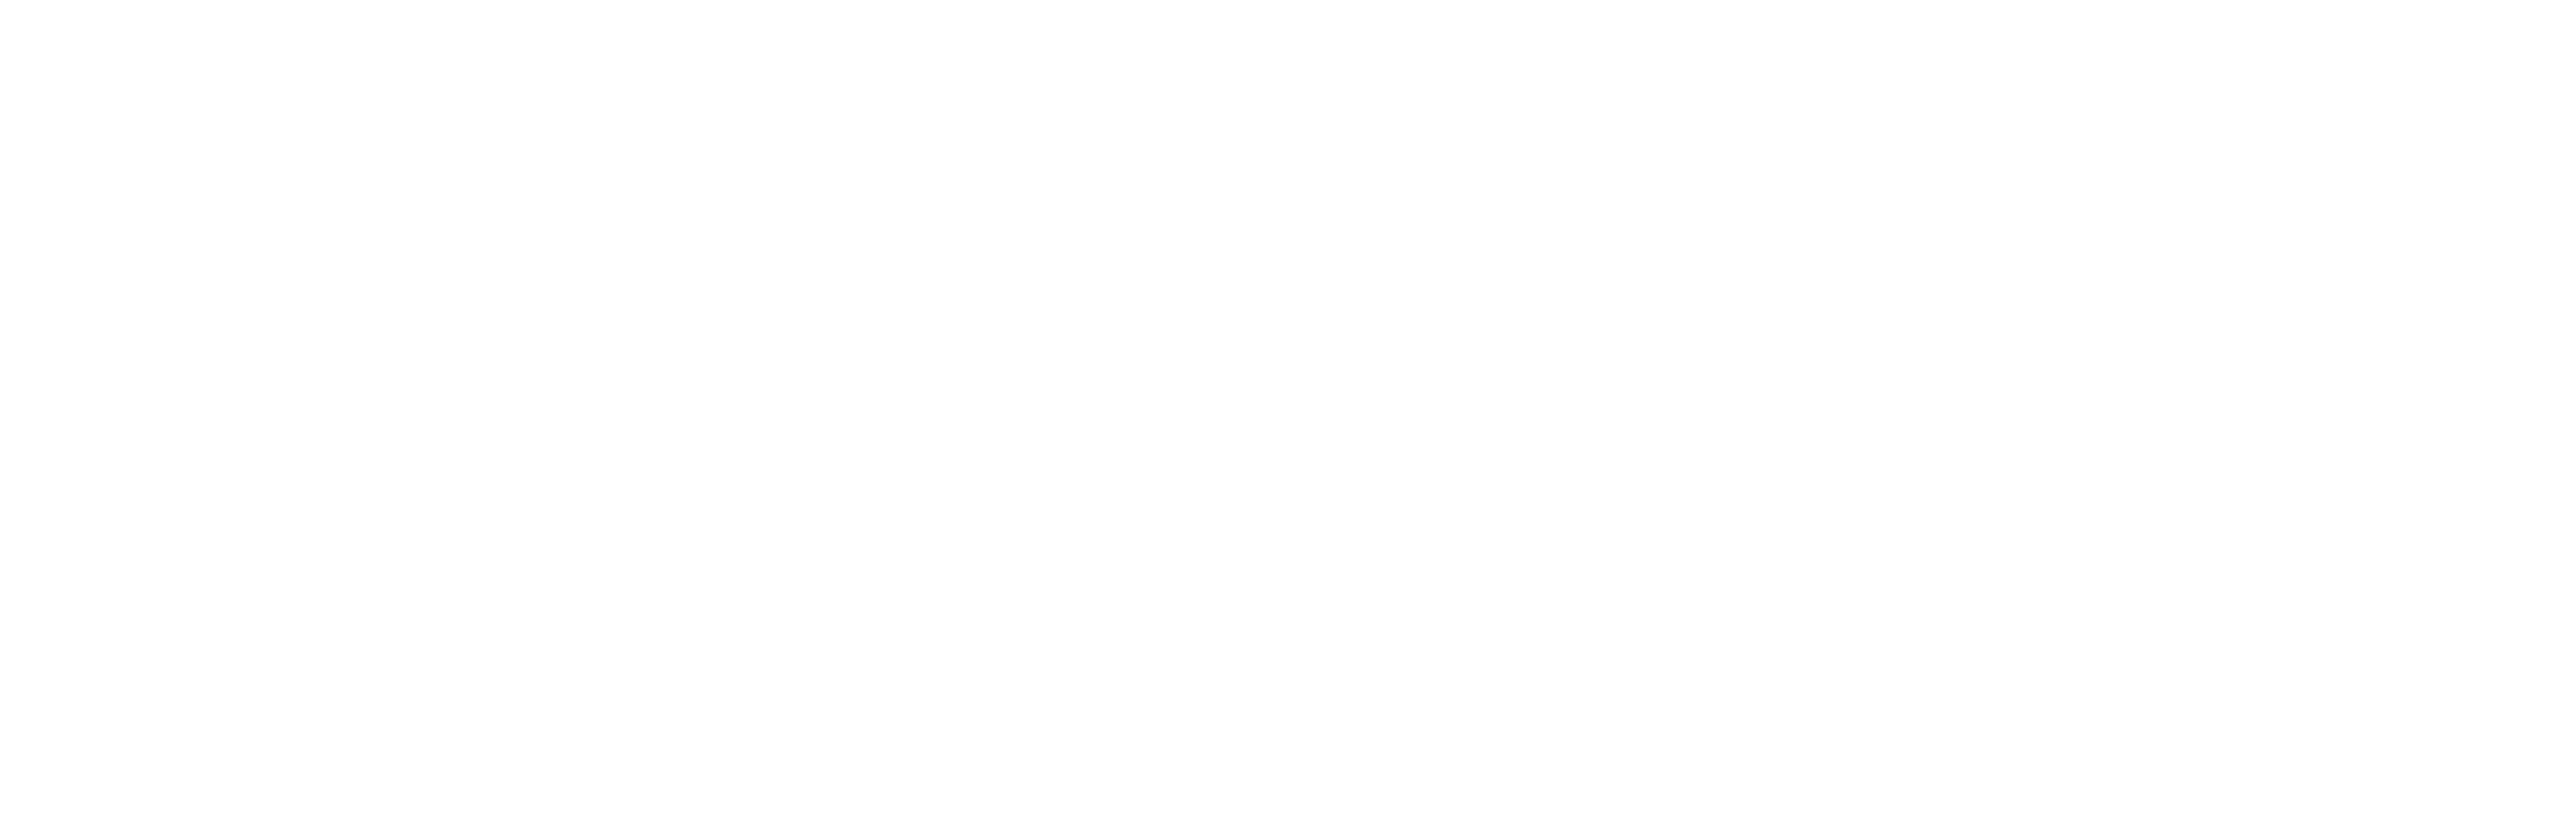 Akademia College